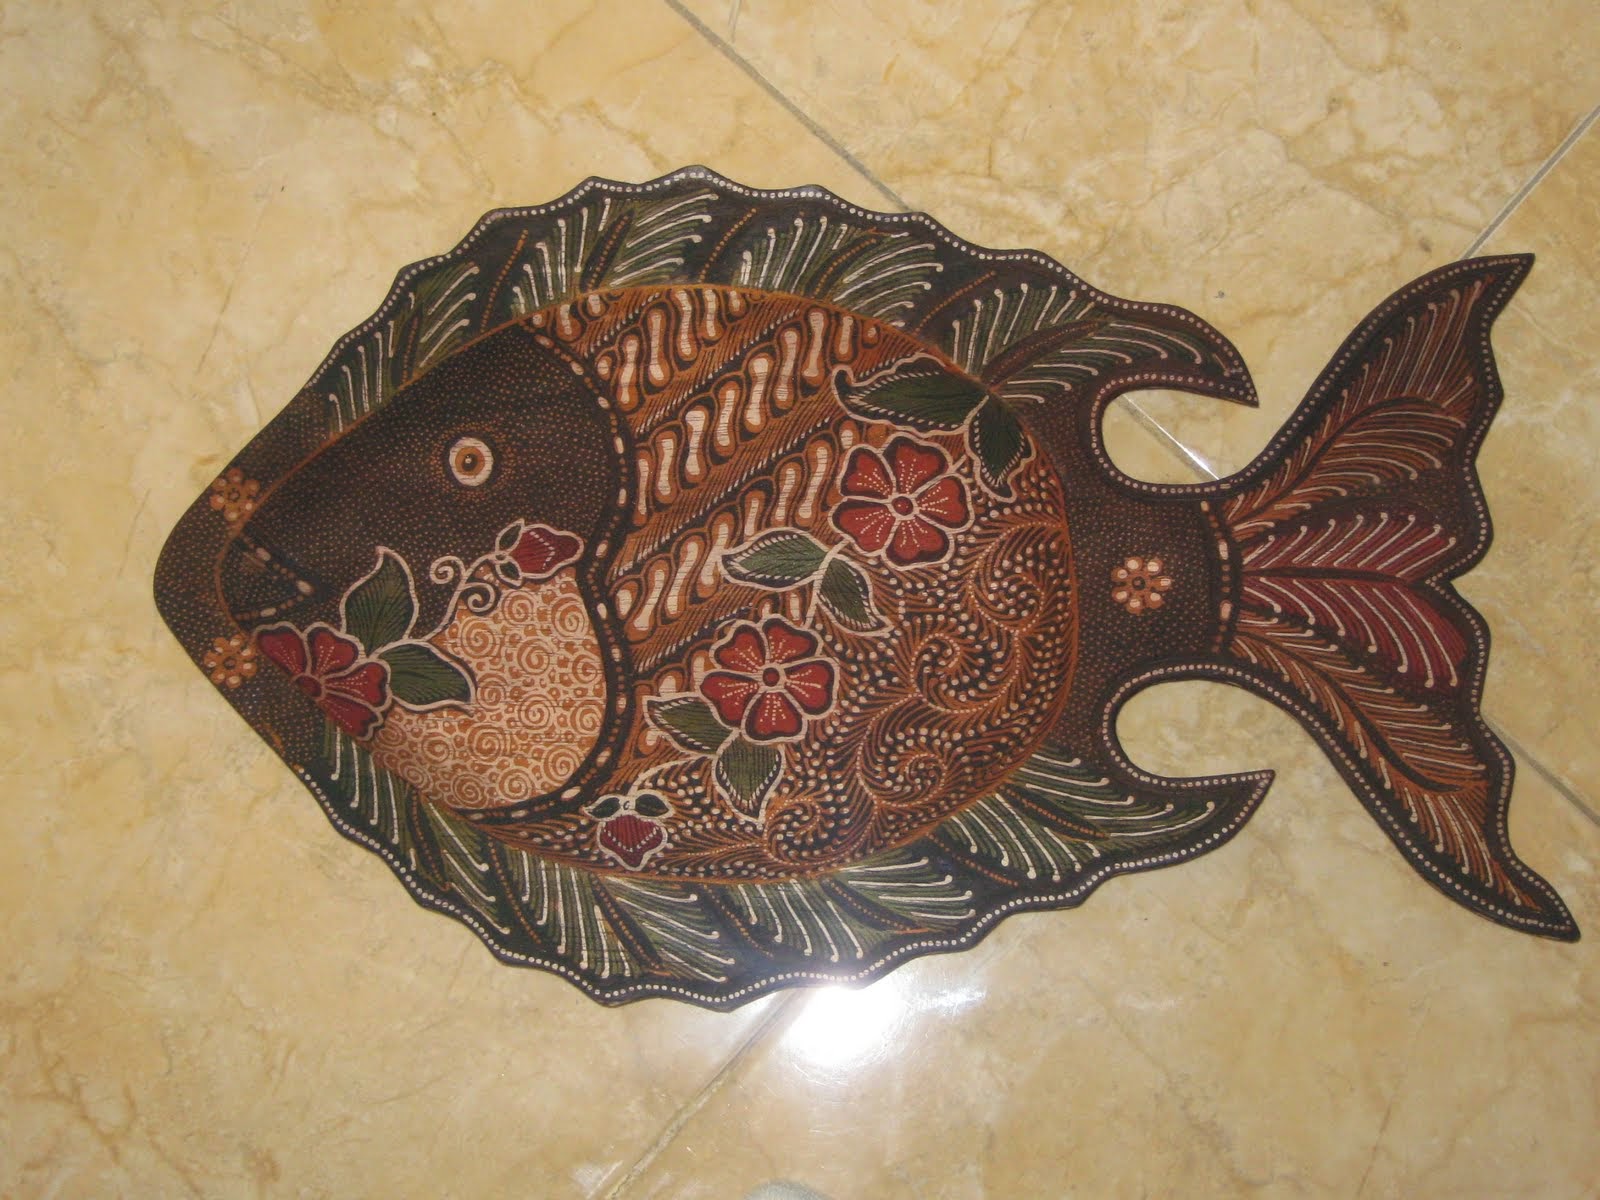 Produk Kreatif Batik  Batik  Inovatif